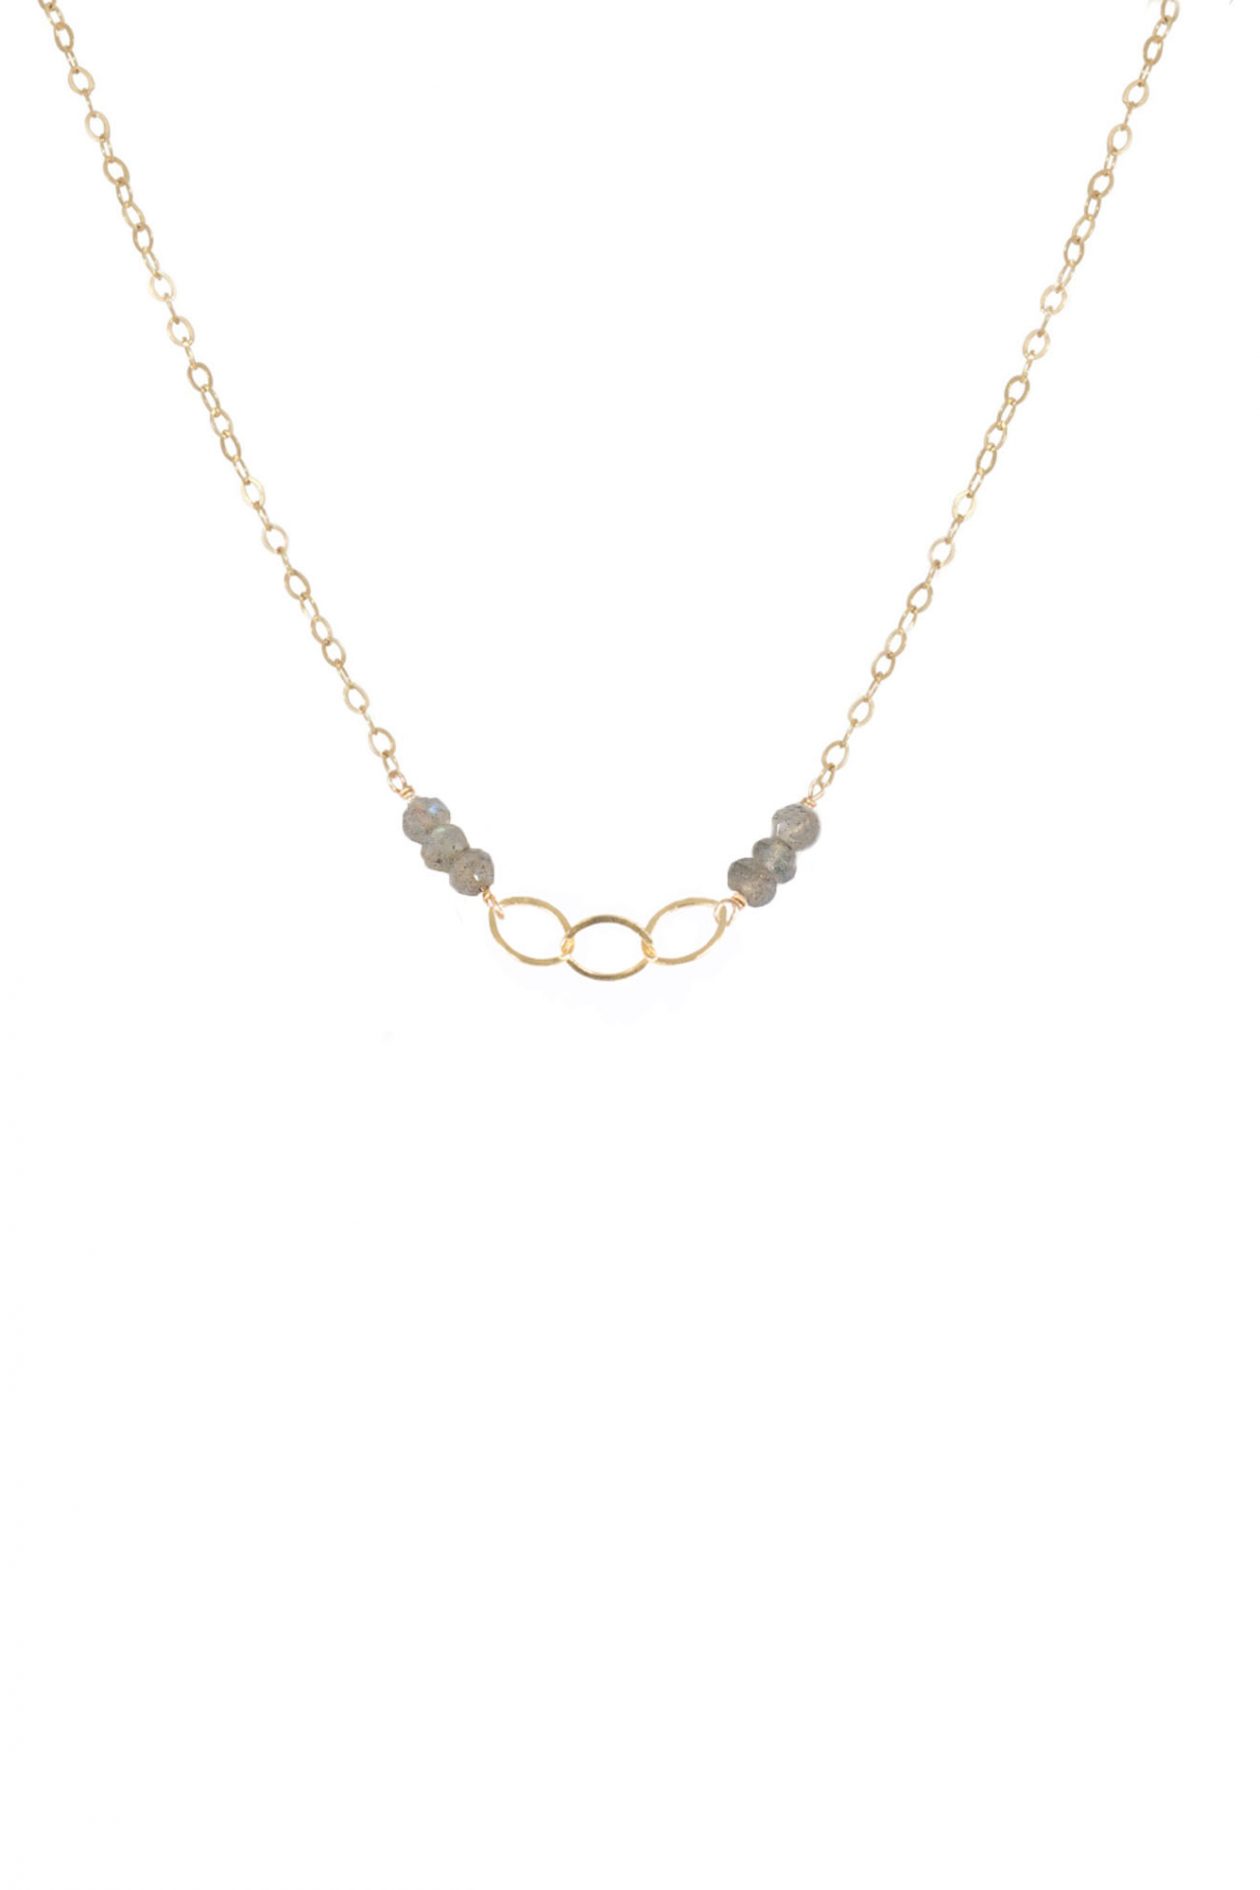 JK Designs Gemstones and 3 Rings Necklace